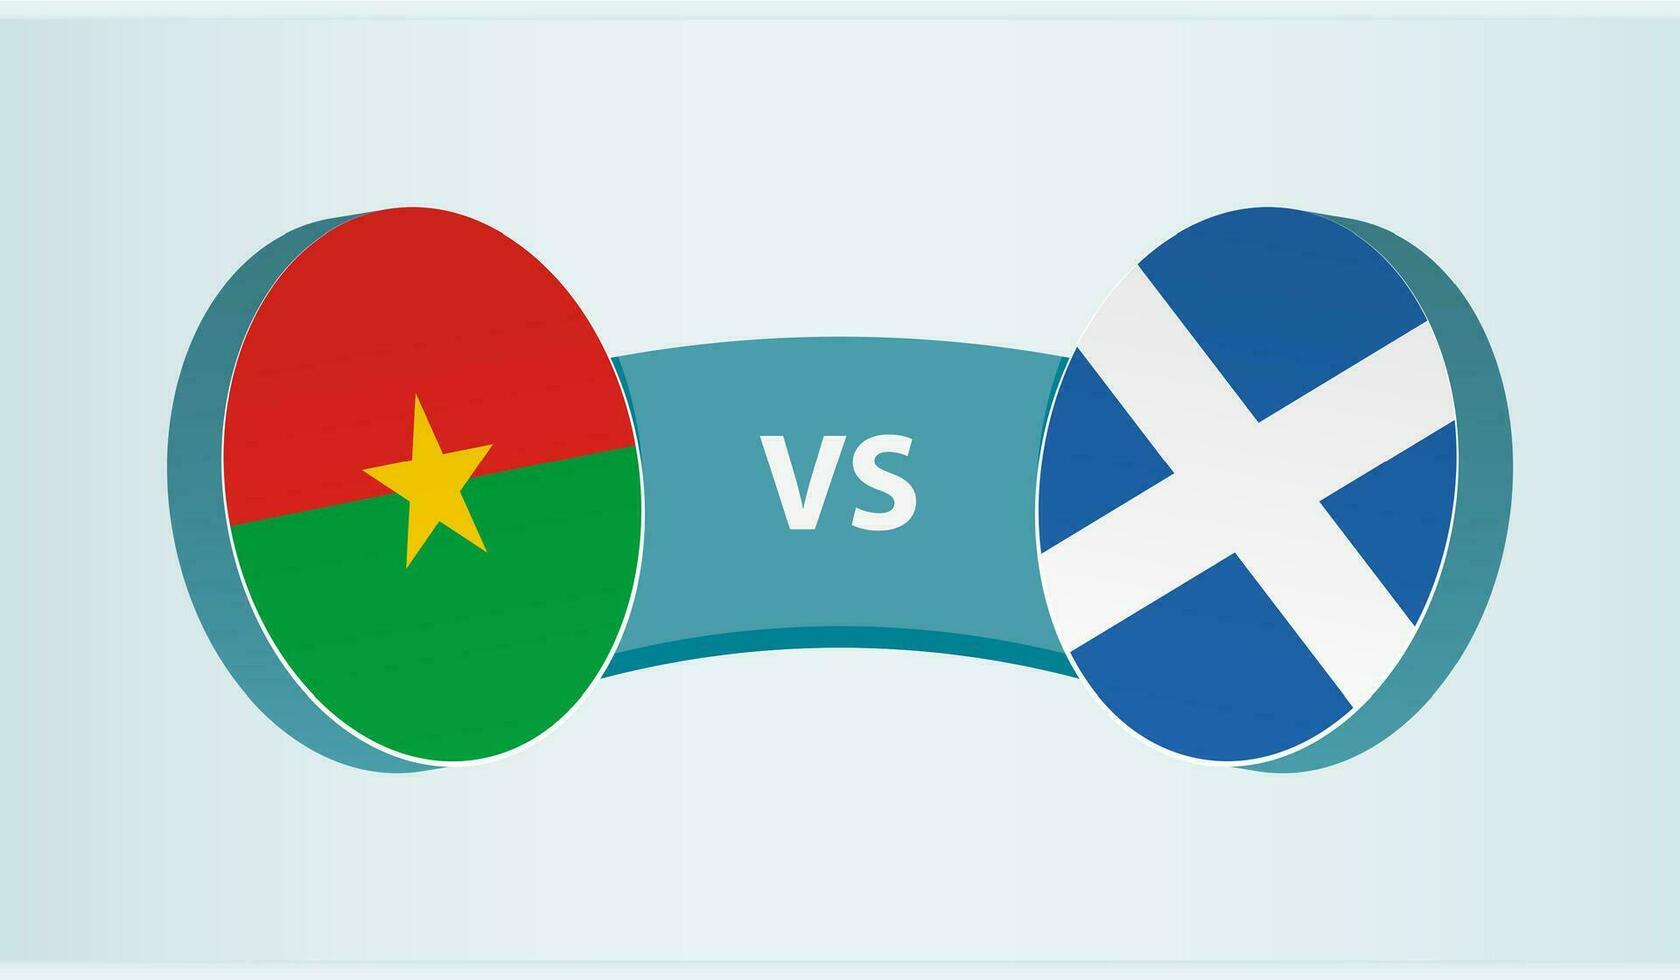 Burkina Faso versus Scotland, team sports competition concept. vector